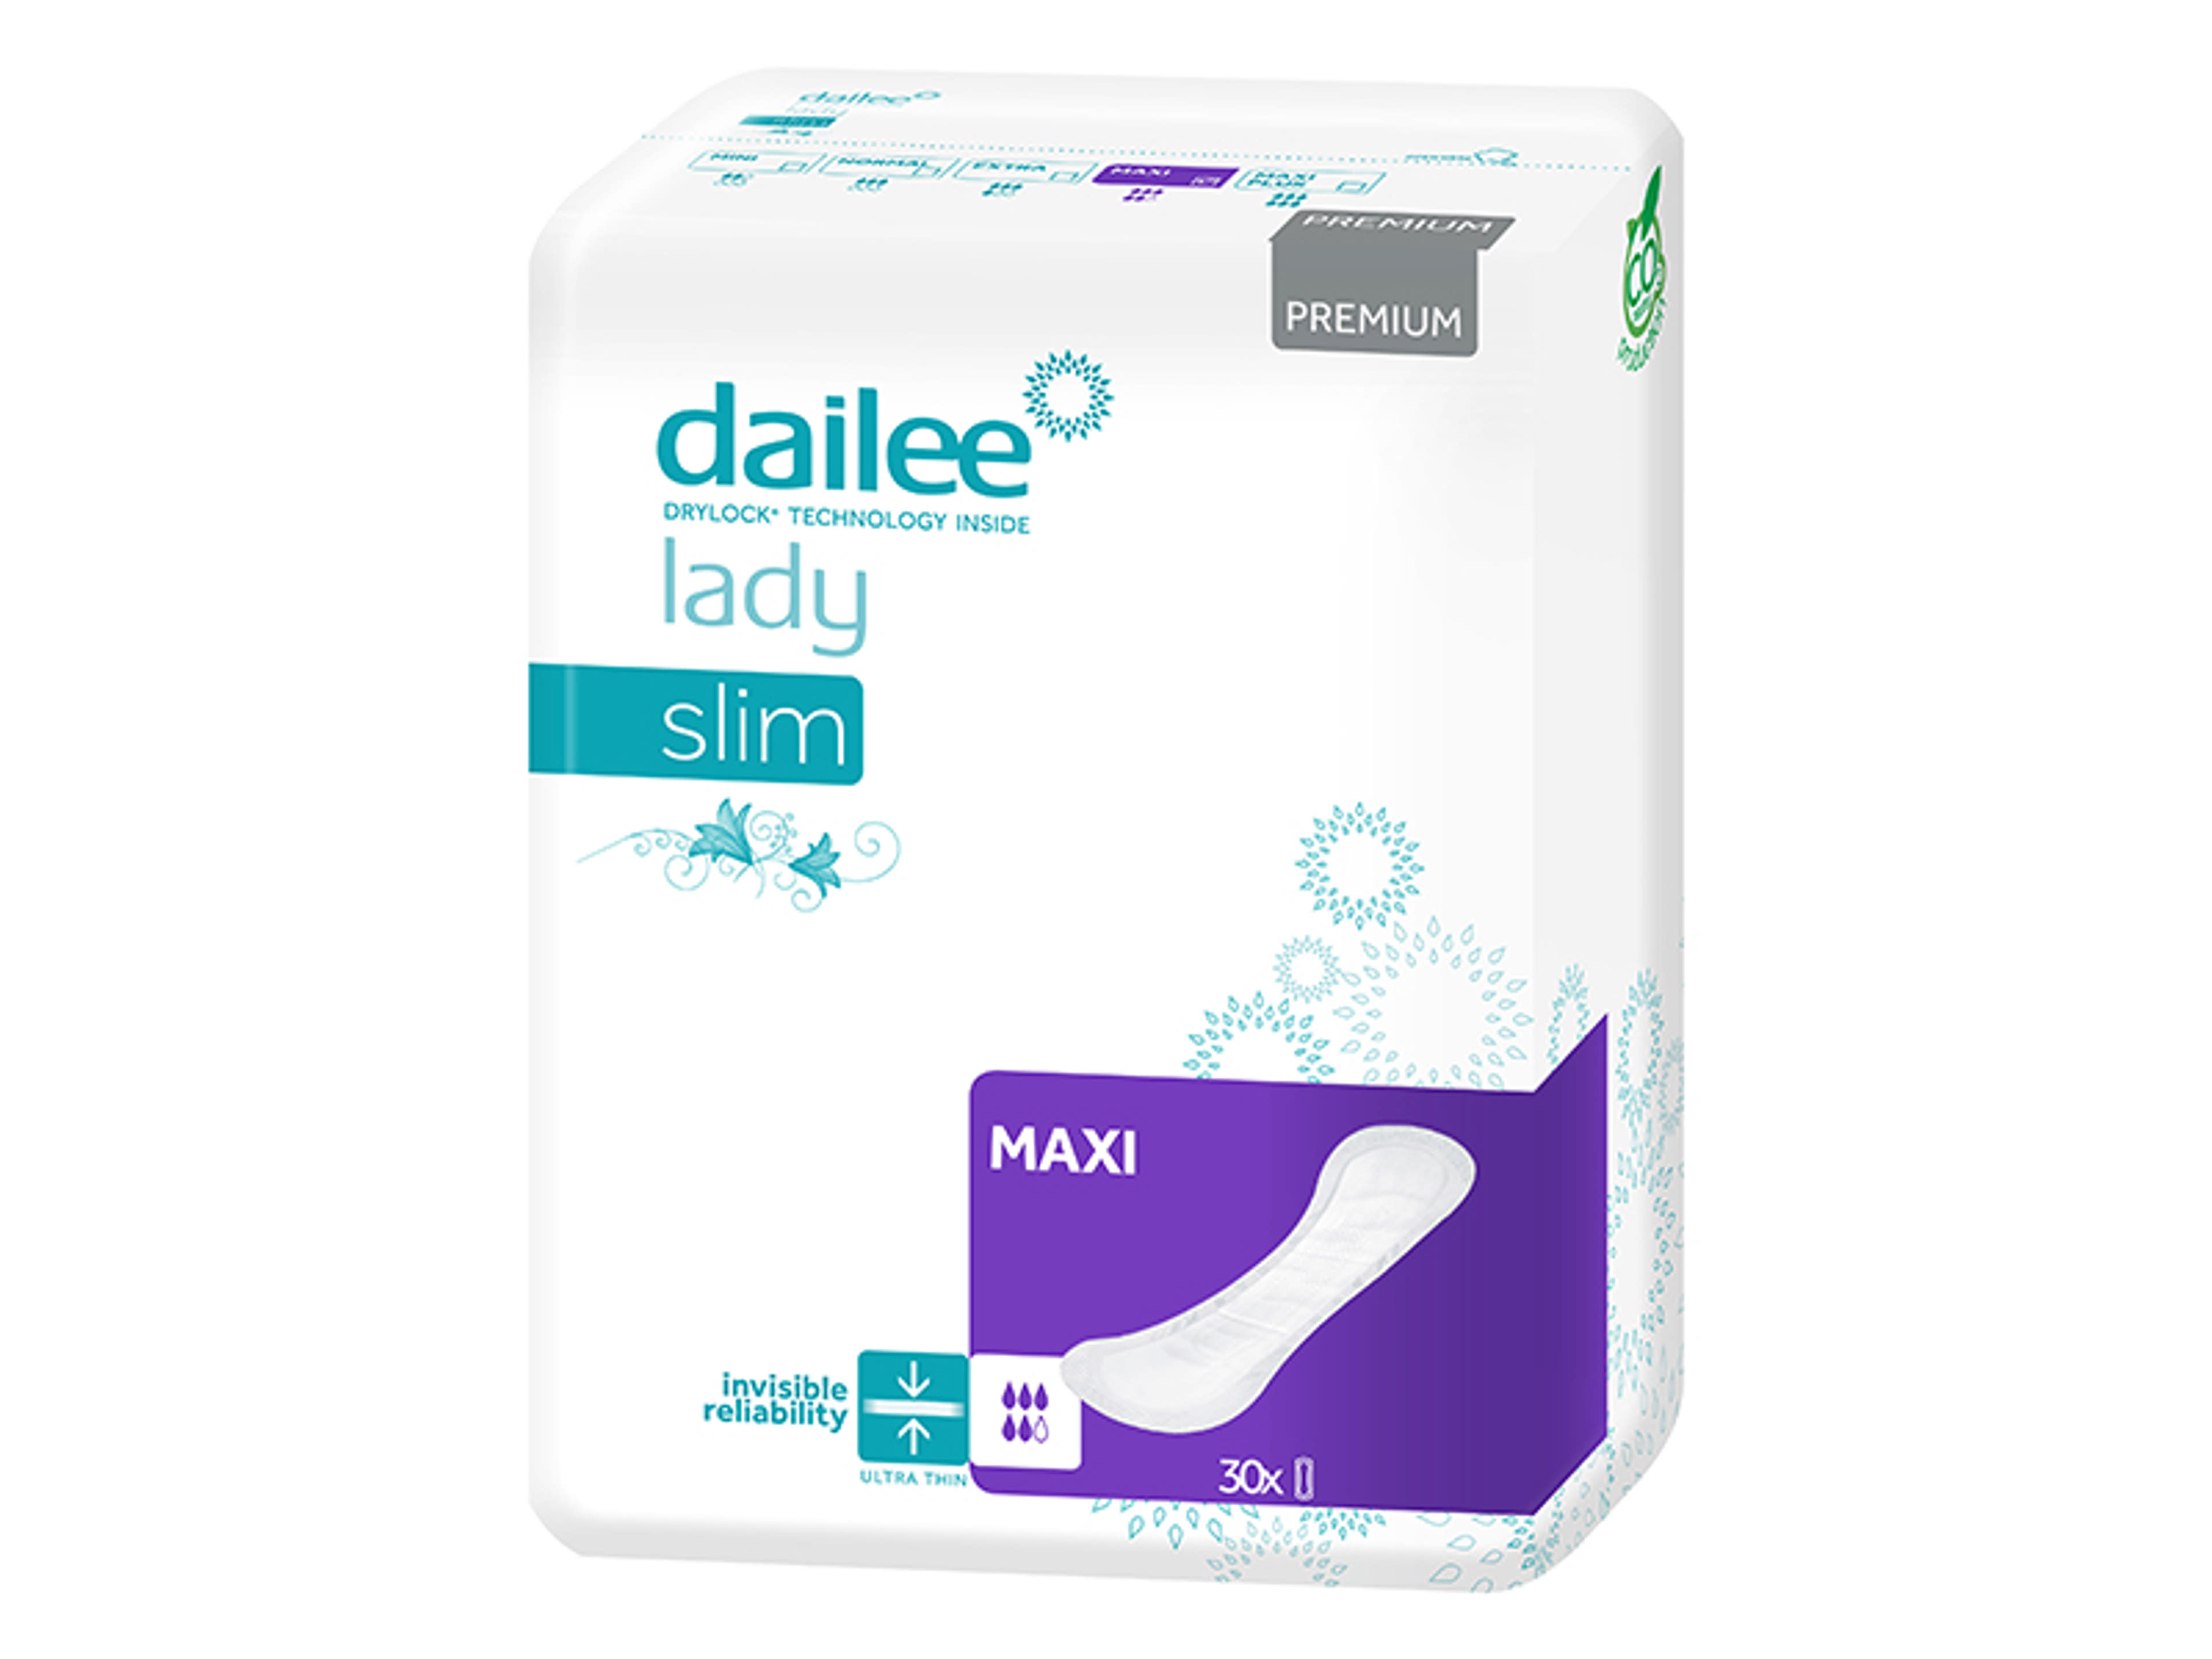 Dailee Lady Premium Slim Maxi inkontinencia betét – 30 db-1